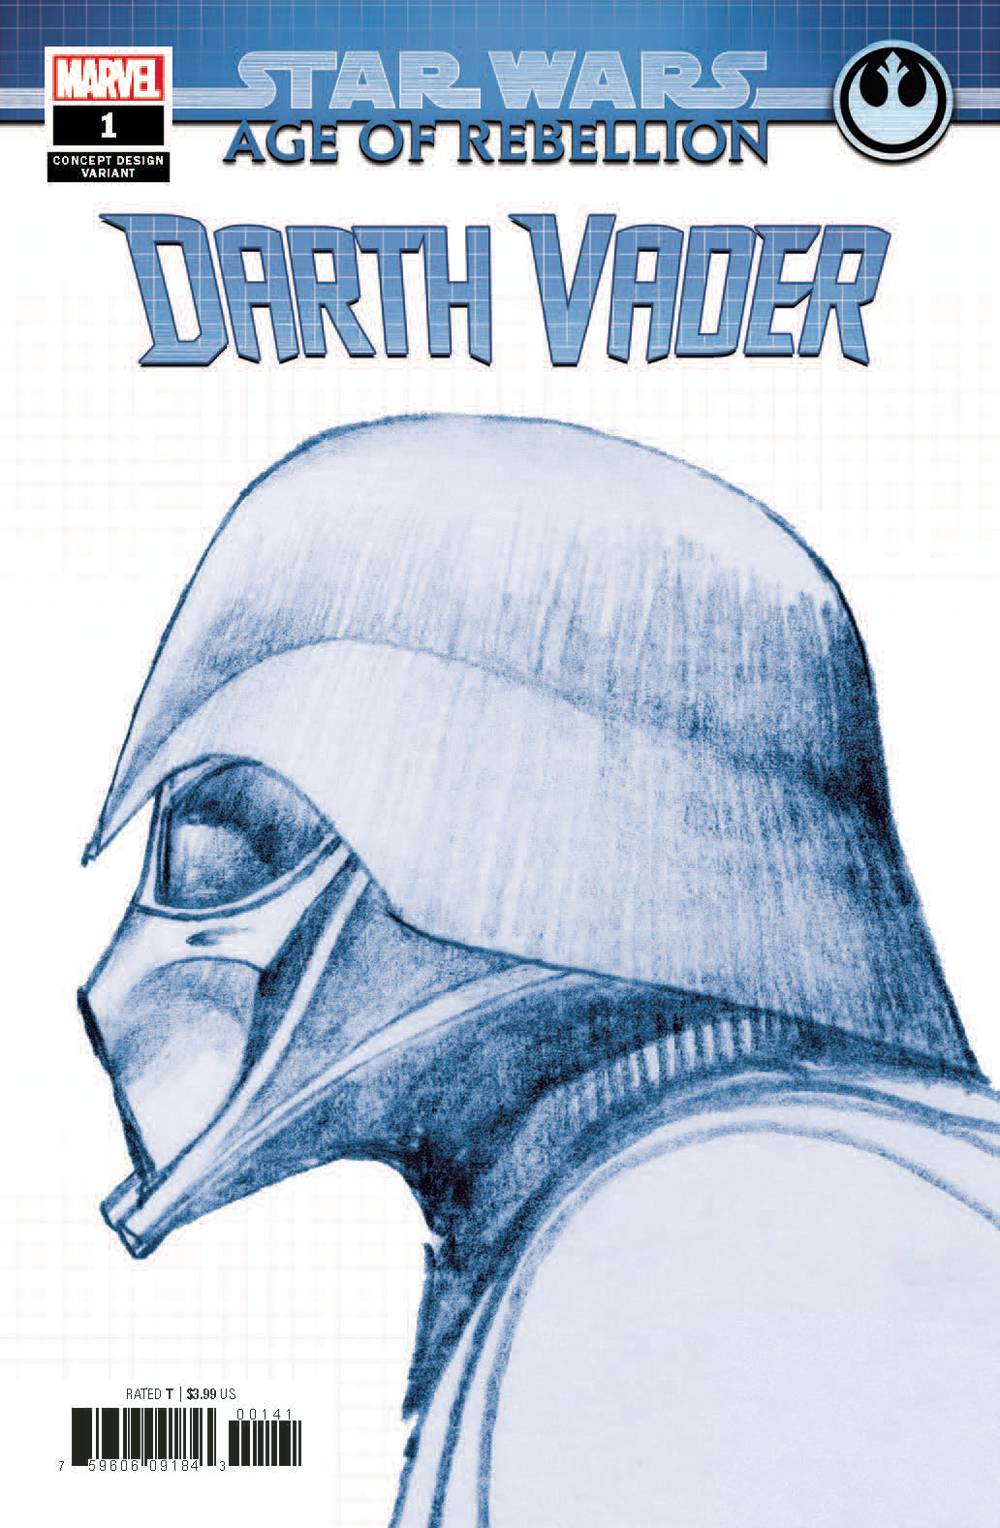 Star Wars Age of Rebellion Darth Vader #1 Concept Variant